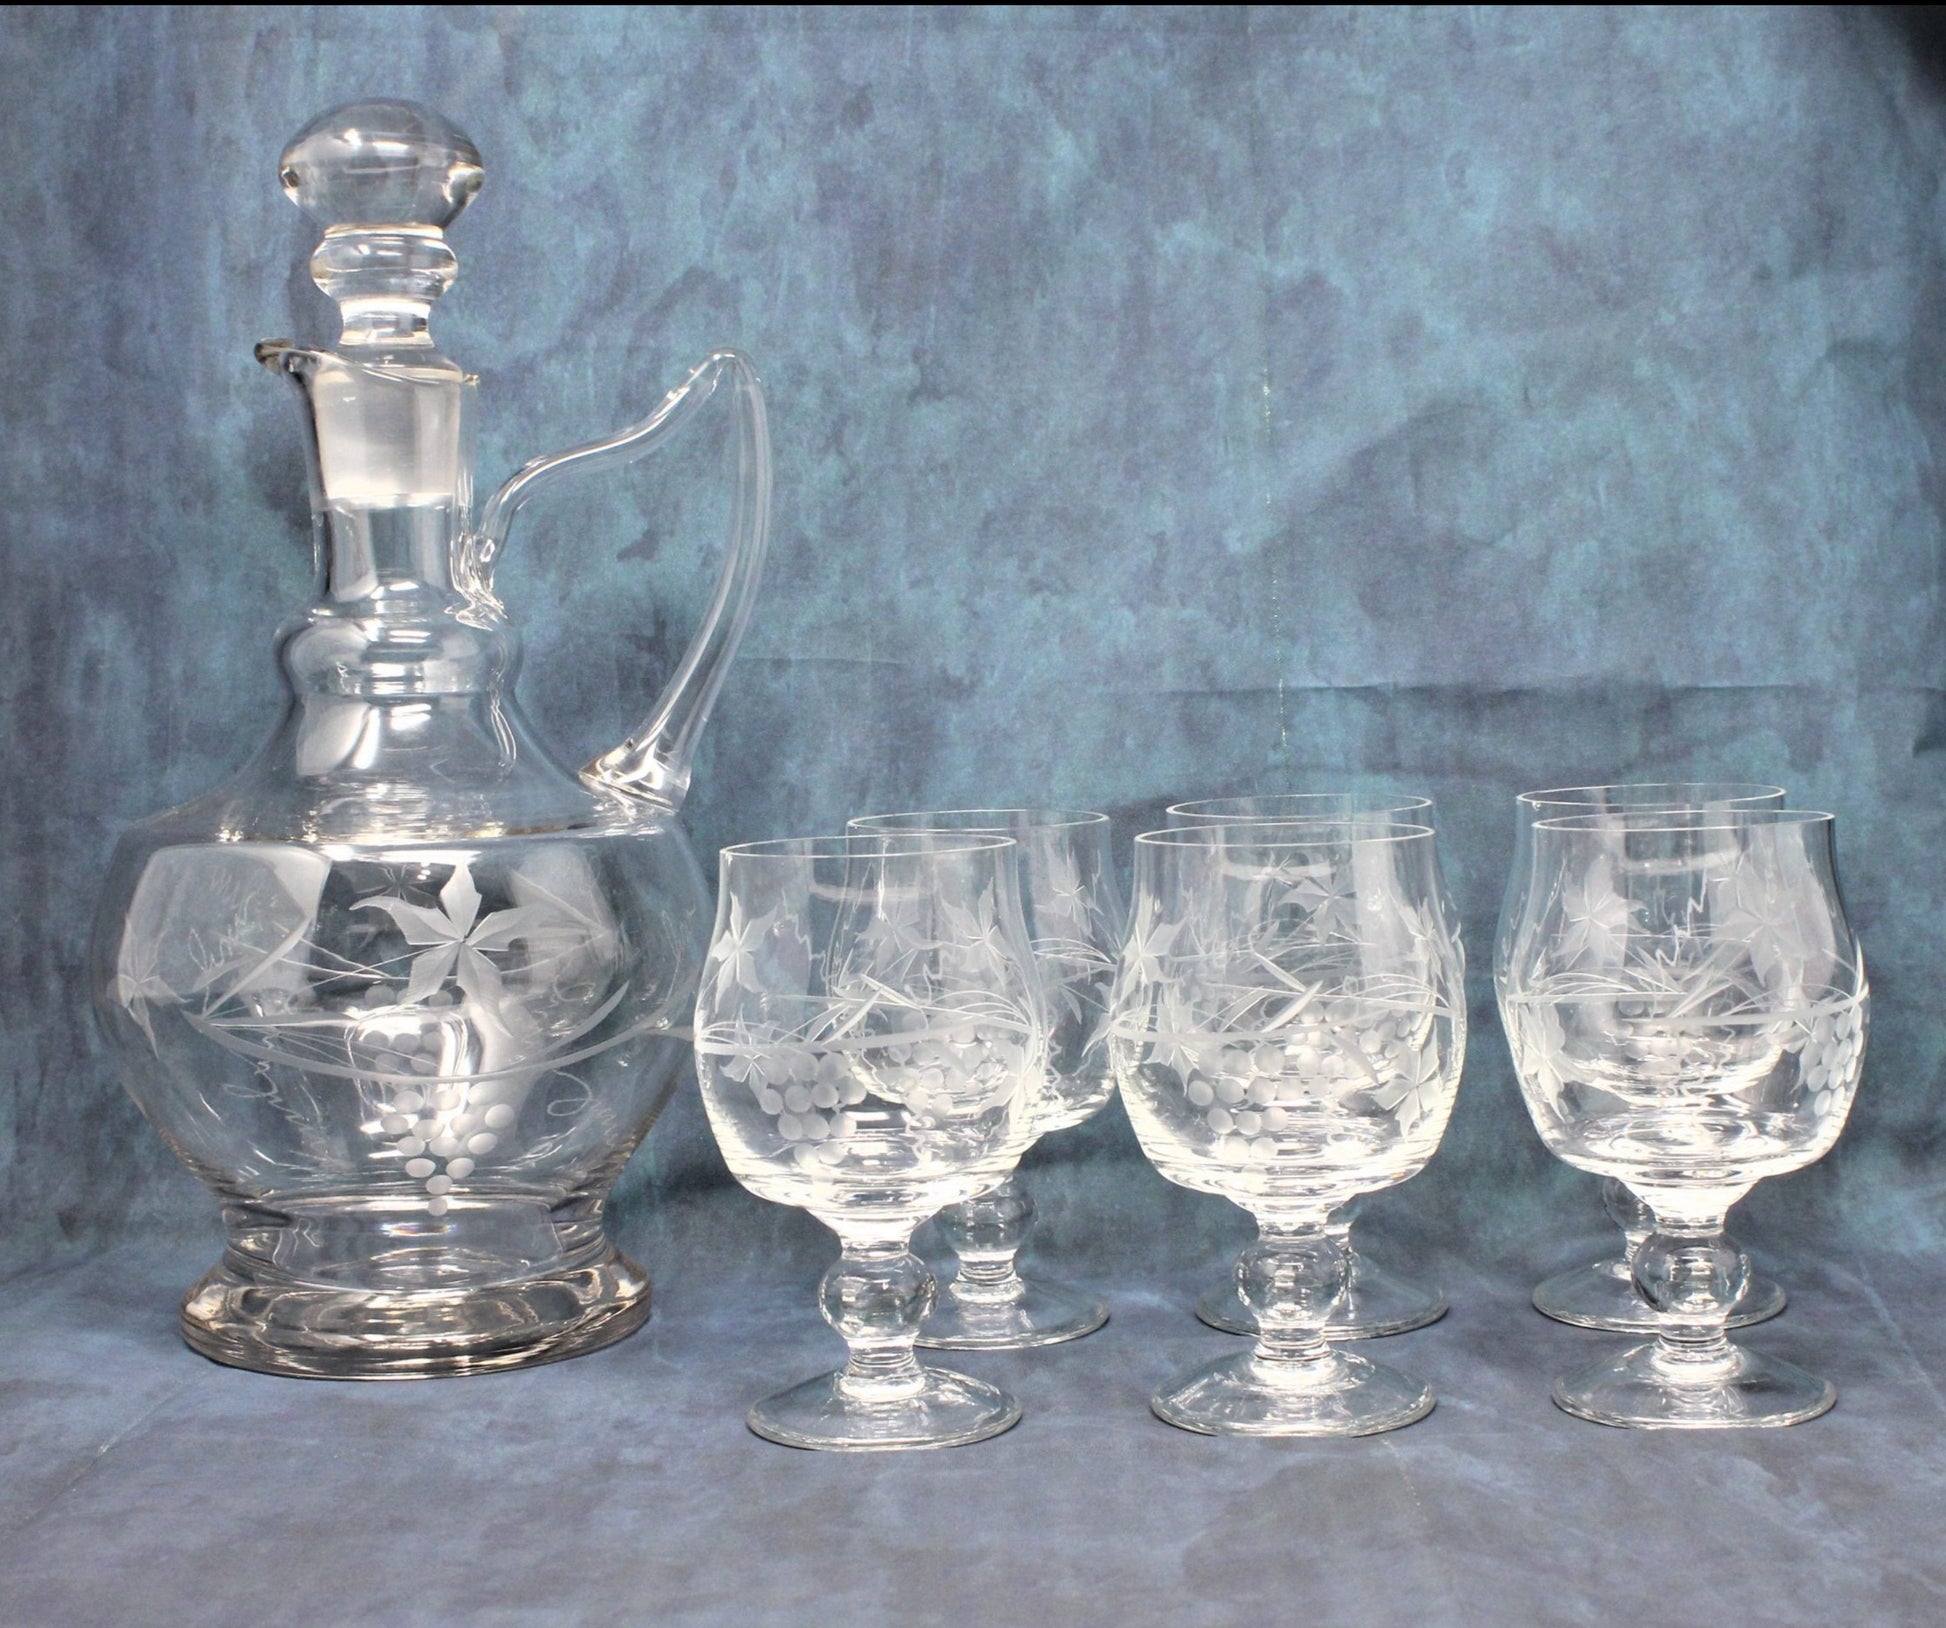 2 Antique or Vintage Etched Wine Glasses Set, Crystal Goblets, Water Glasses,  Wine Glasses, Tall Stem Tulip Glasses, 8 Tall. -  Israel